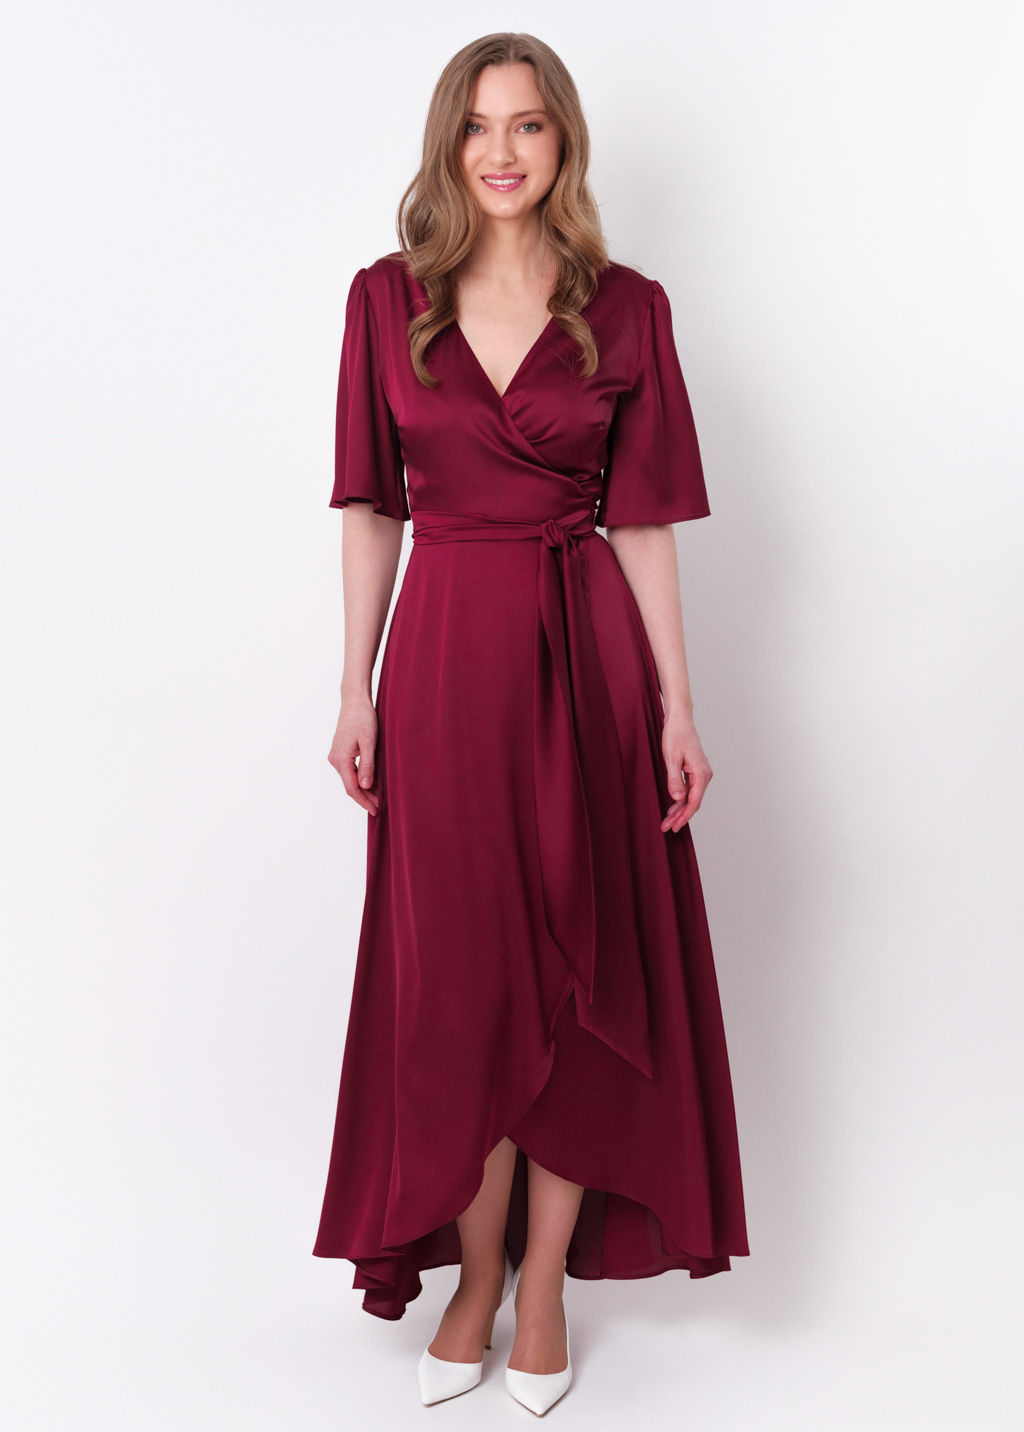 Burgundy silk long wrap dress